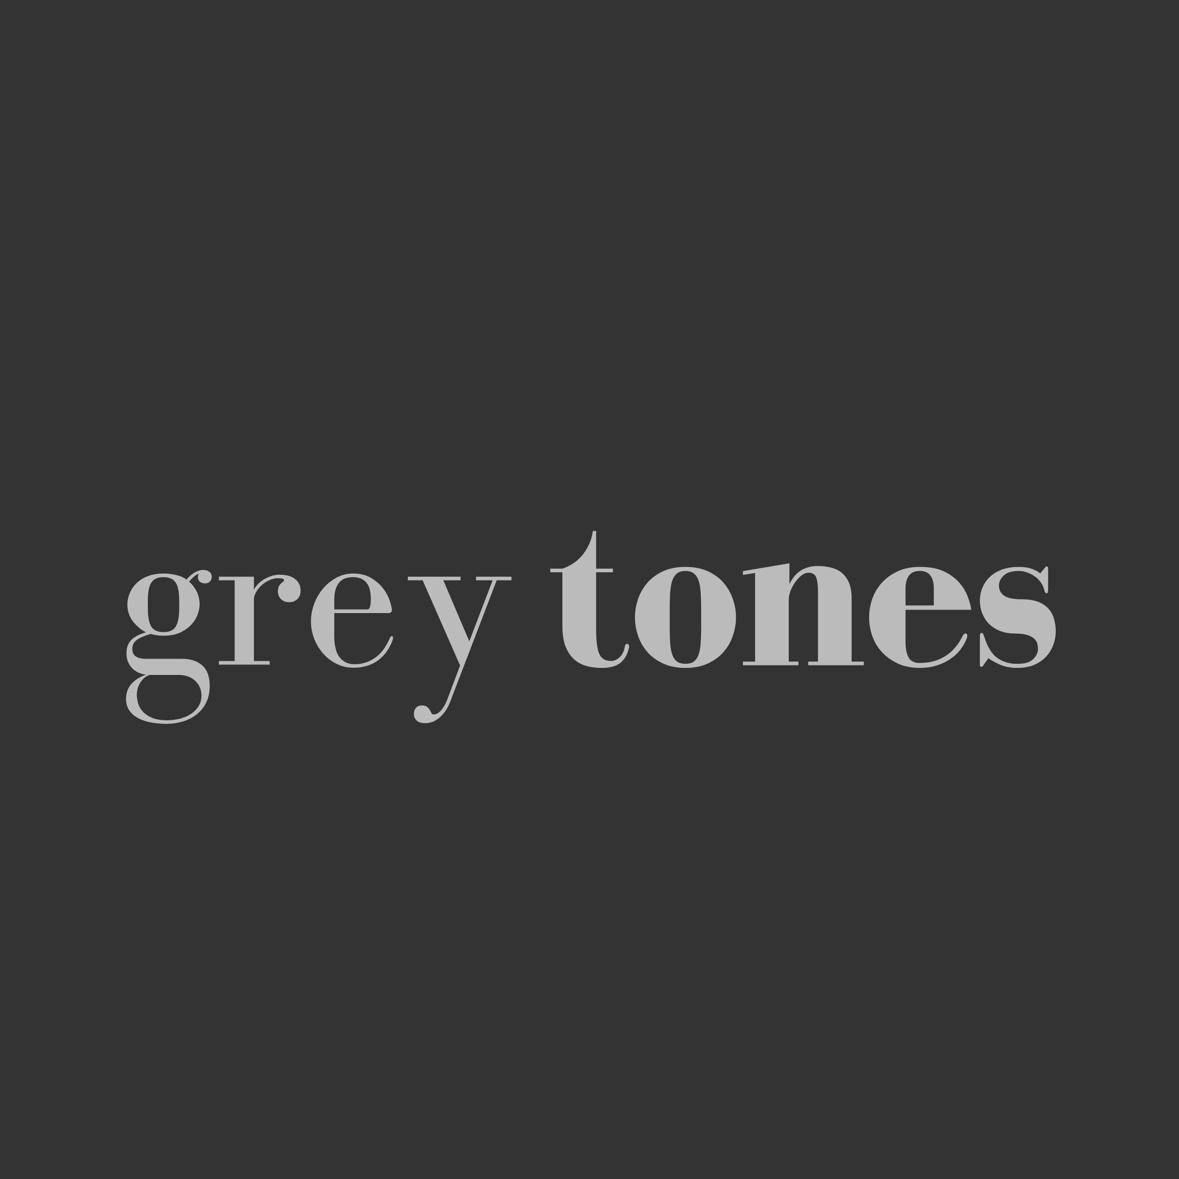 Grey Tones's images